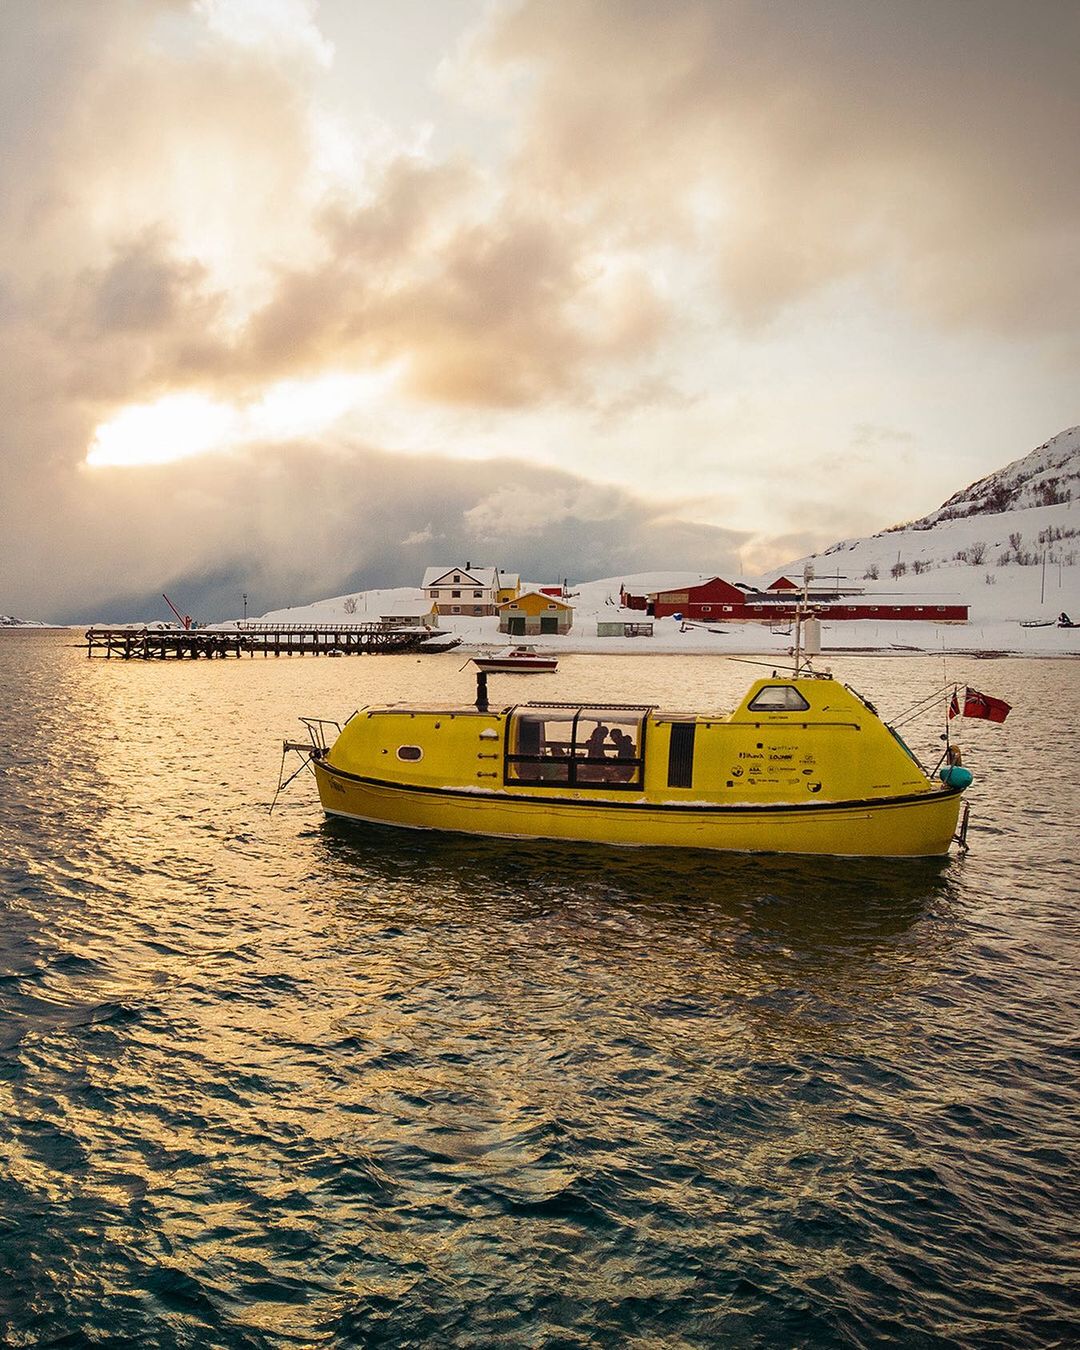 Stødig, arctic lifeboat (copyright Guylee Simmonds & David Schnabel)